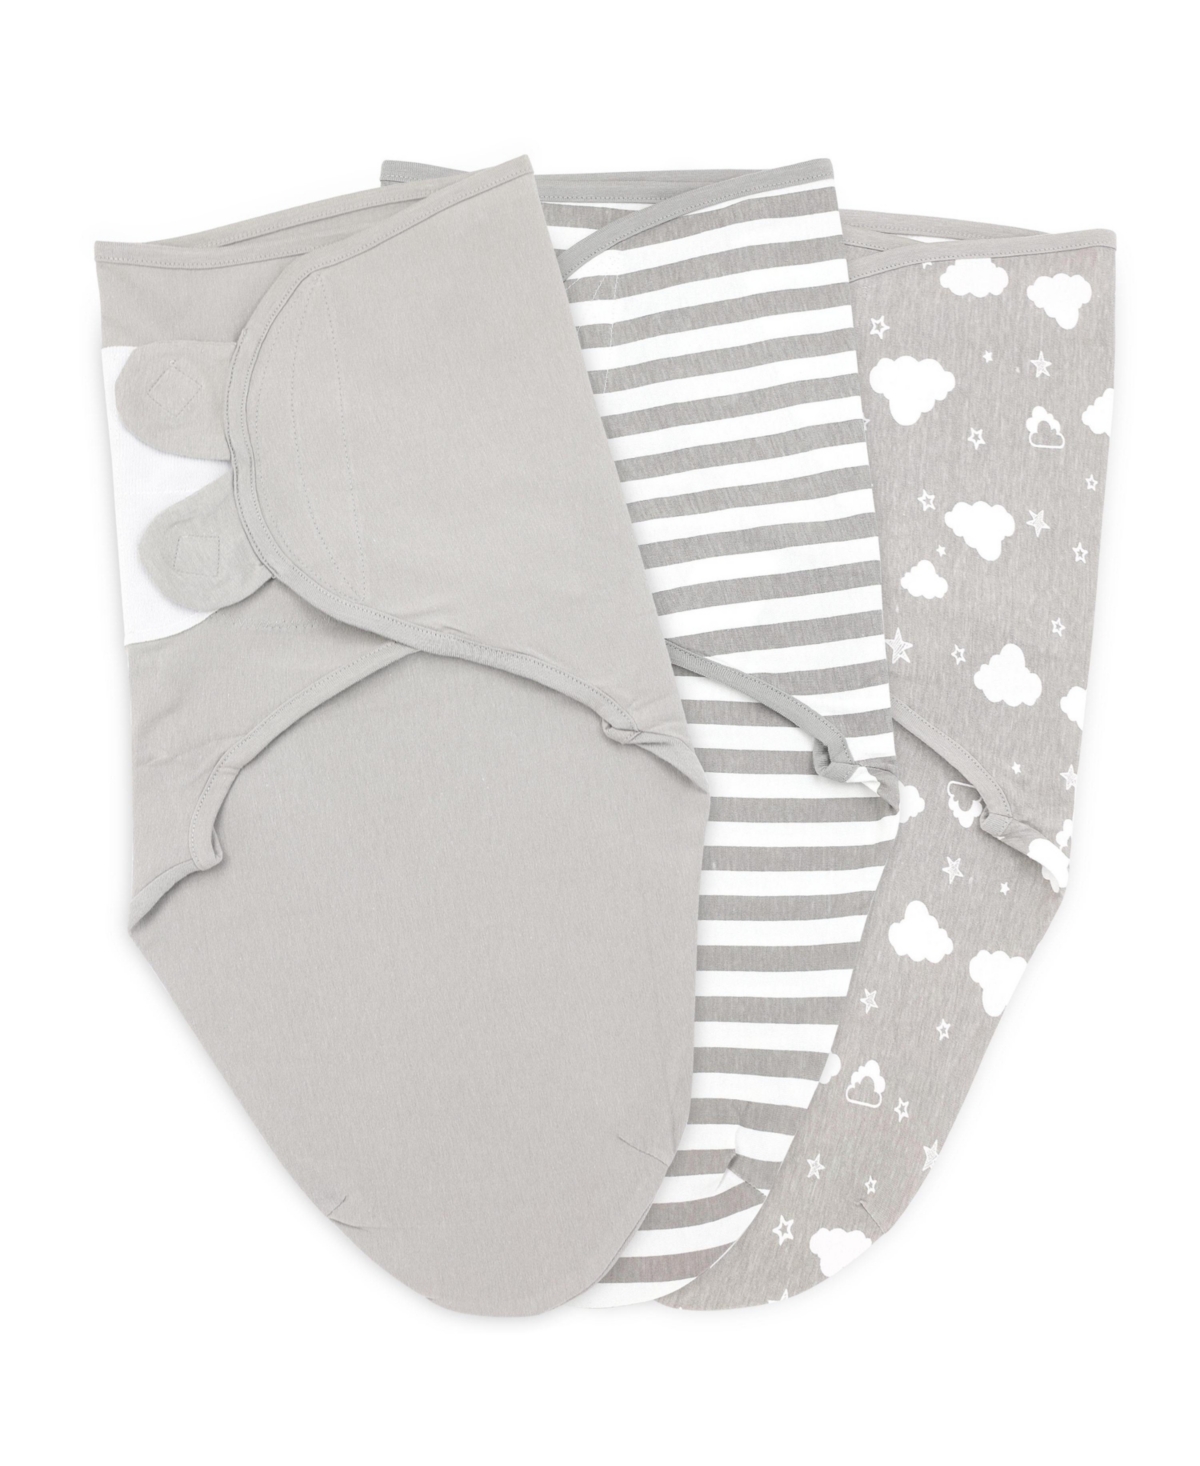 Bublo Baby Kids' Baby Swaddle Blanket Boy Girl, 3 Pack Newborn Swaddles, Infant Adjustable Swaddling Sleep Sack In Grey